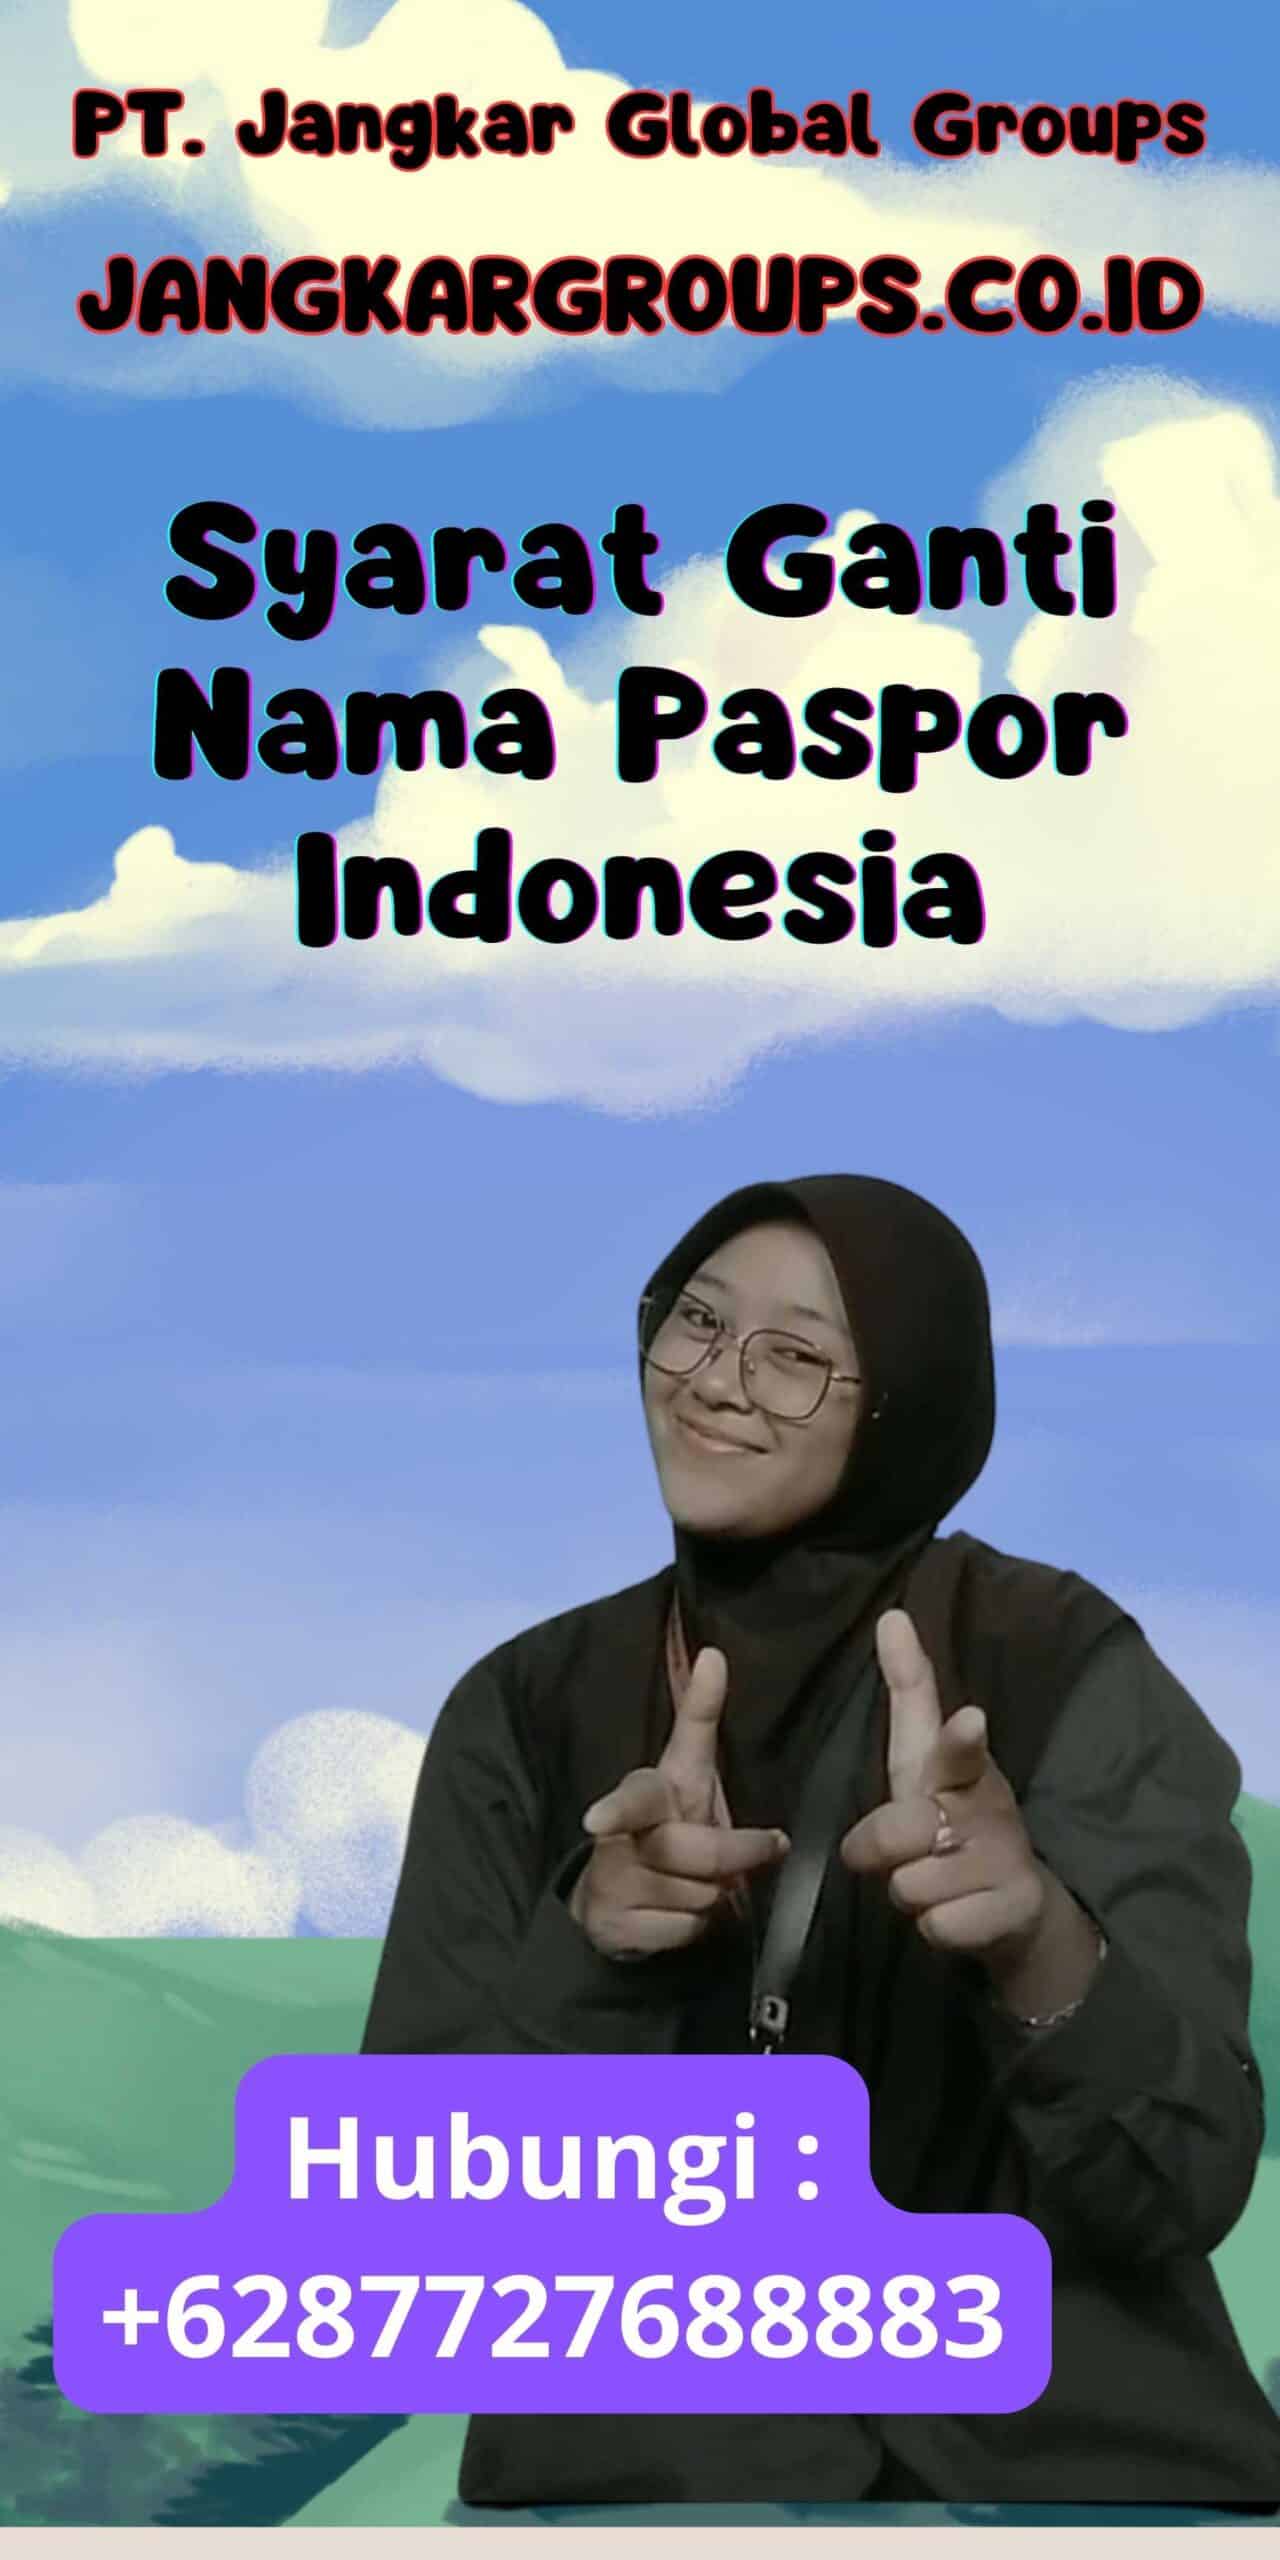 Syarat Ganti Nama Paspor Indonesia